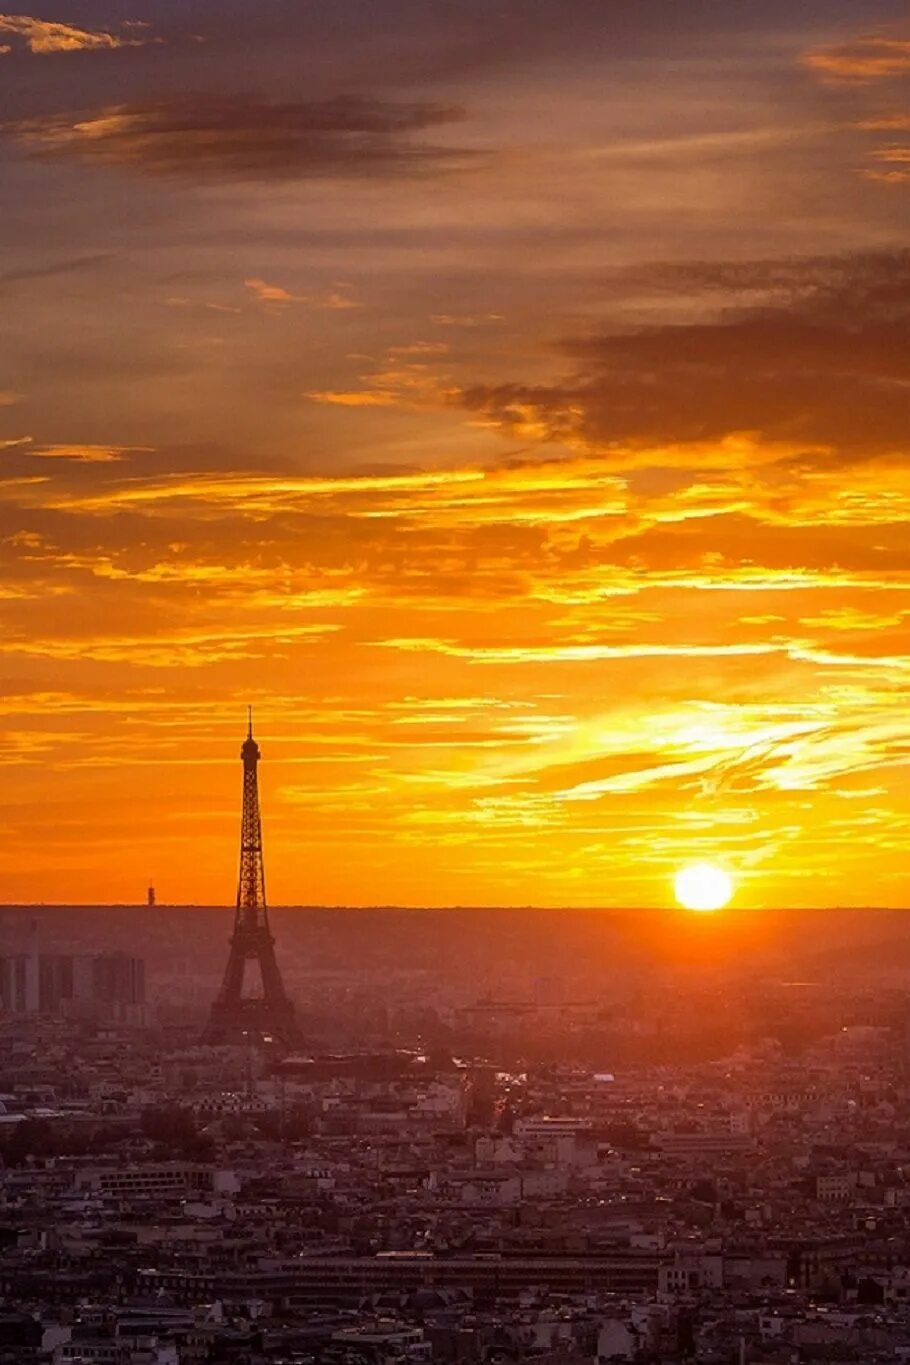 Француз рассвет. Париж рассвет Эйфелева башня. Париж закат. Красивый закат в Париже. Рассвет в Париже.